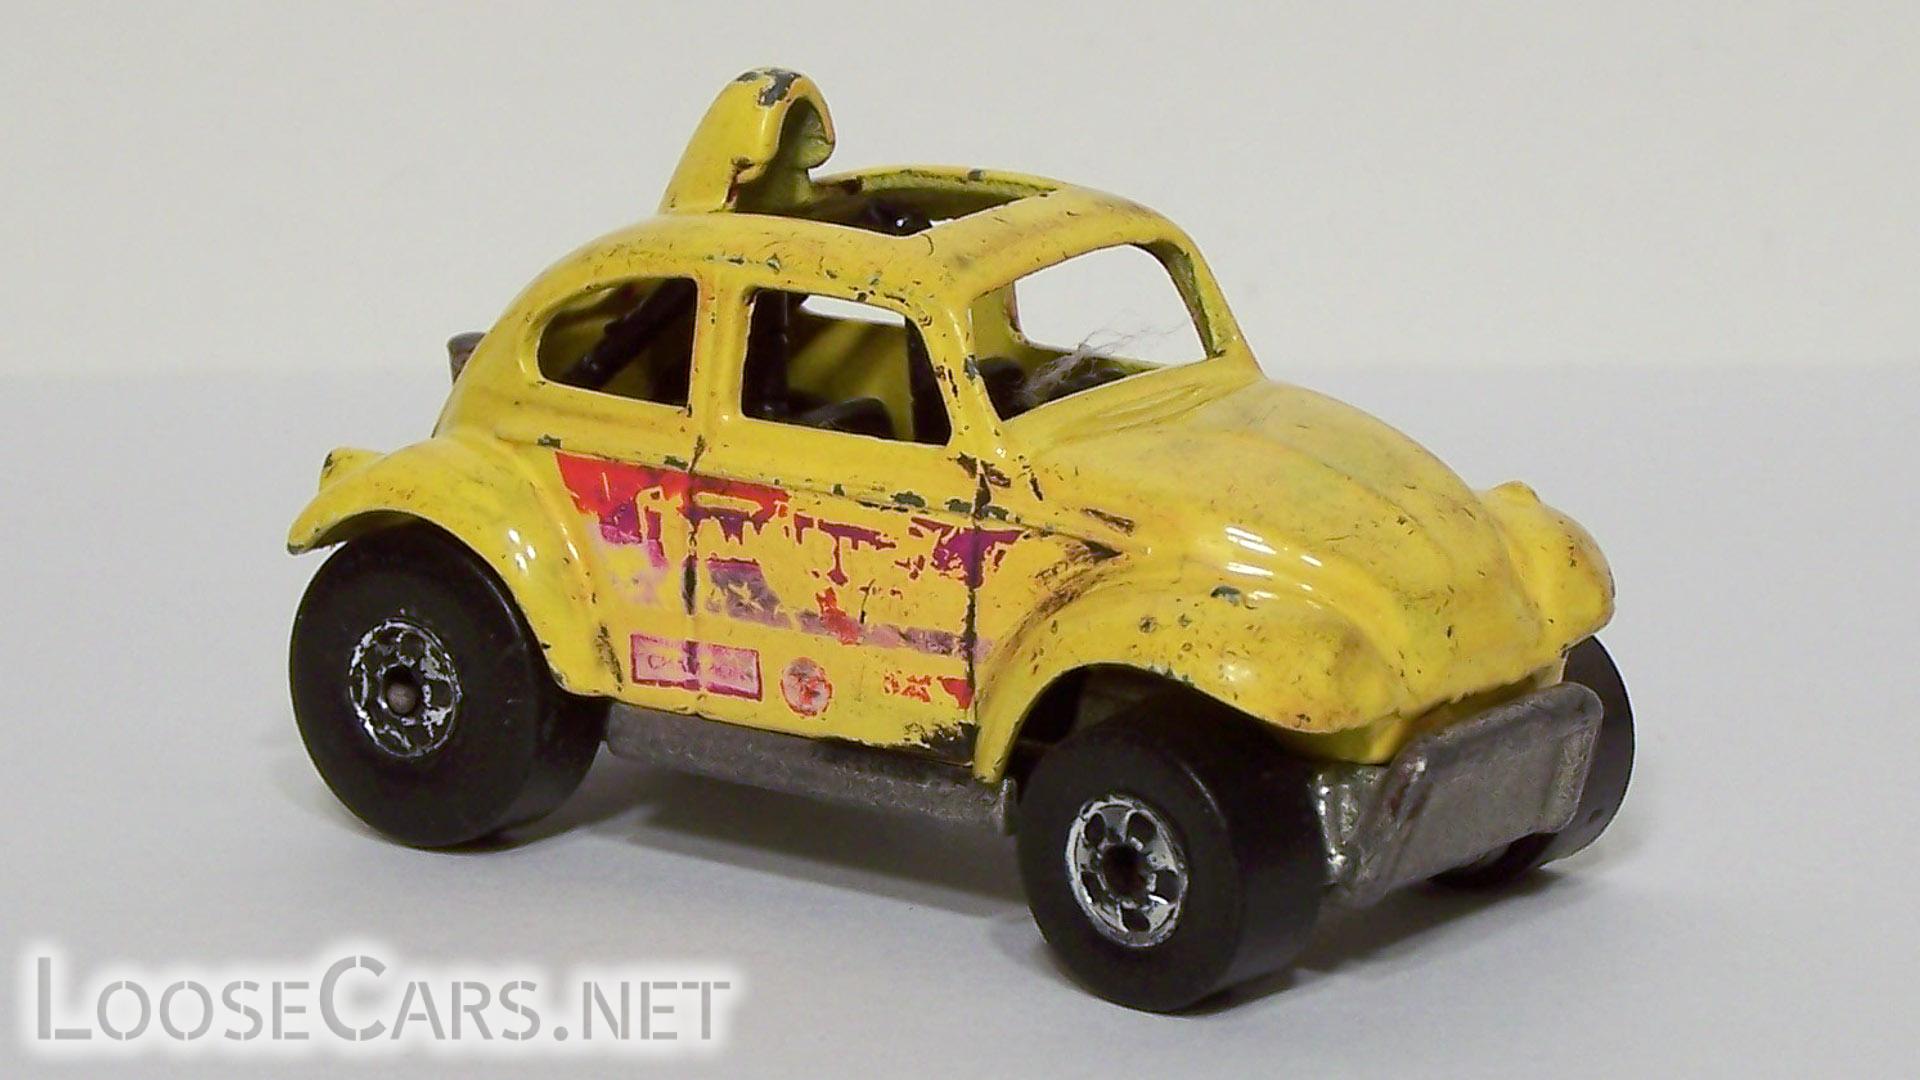 Hot Wheels Baja Beetle: 1984 #5907 Front Right